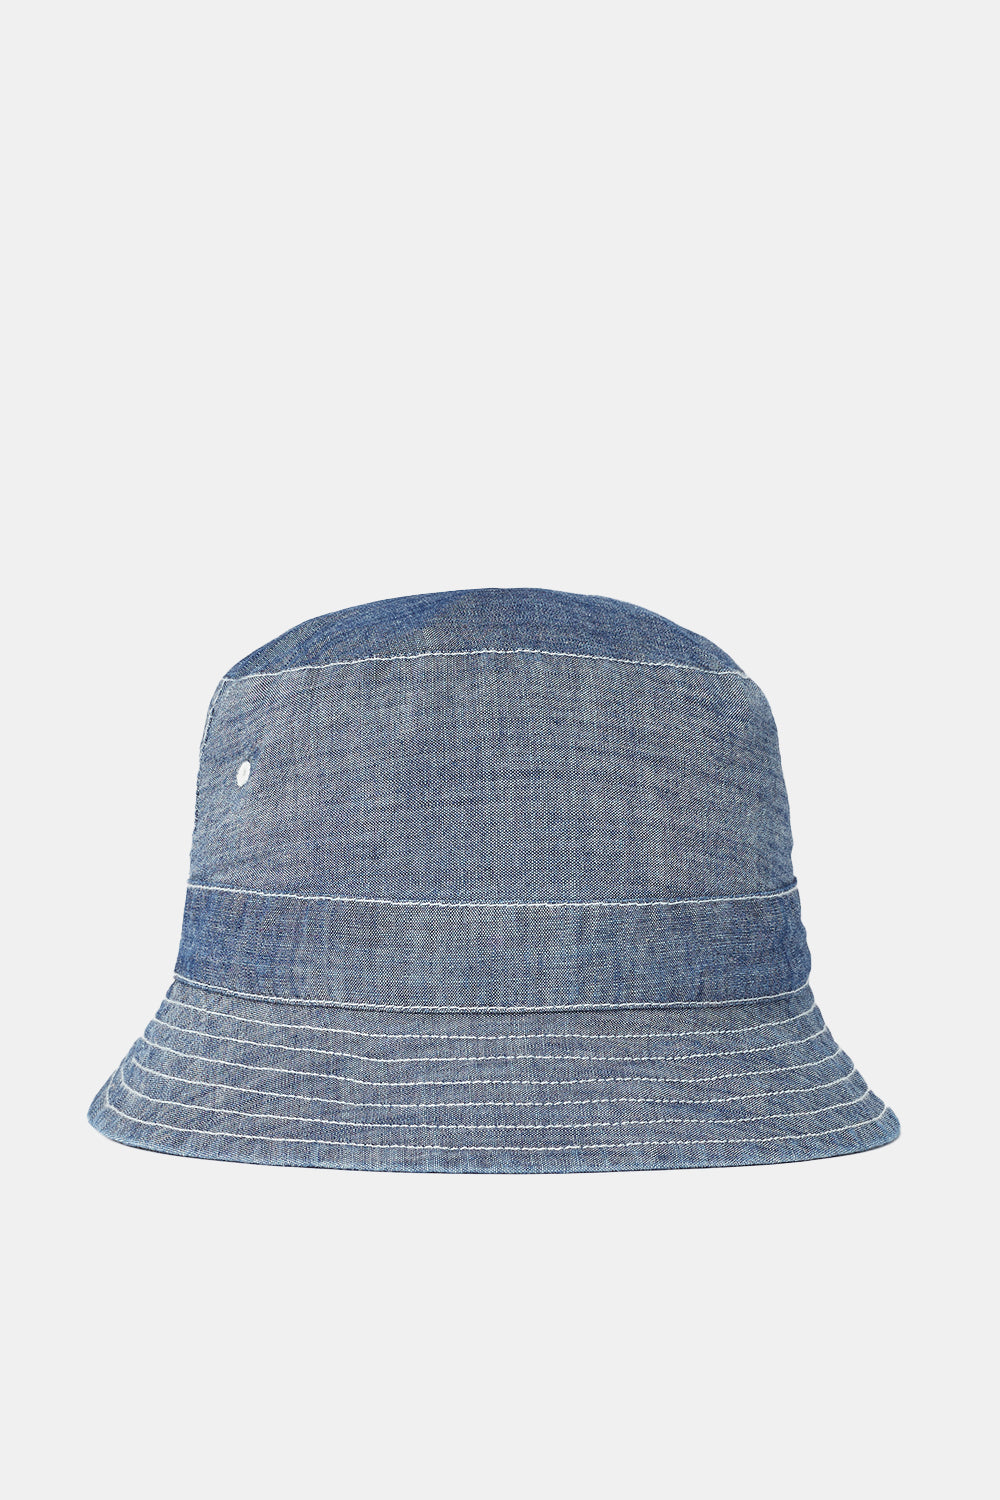 Universal Works Chambray Bucket Hat (Indigo)